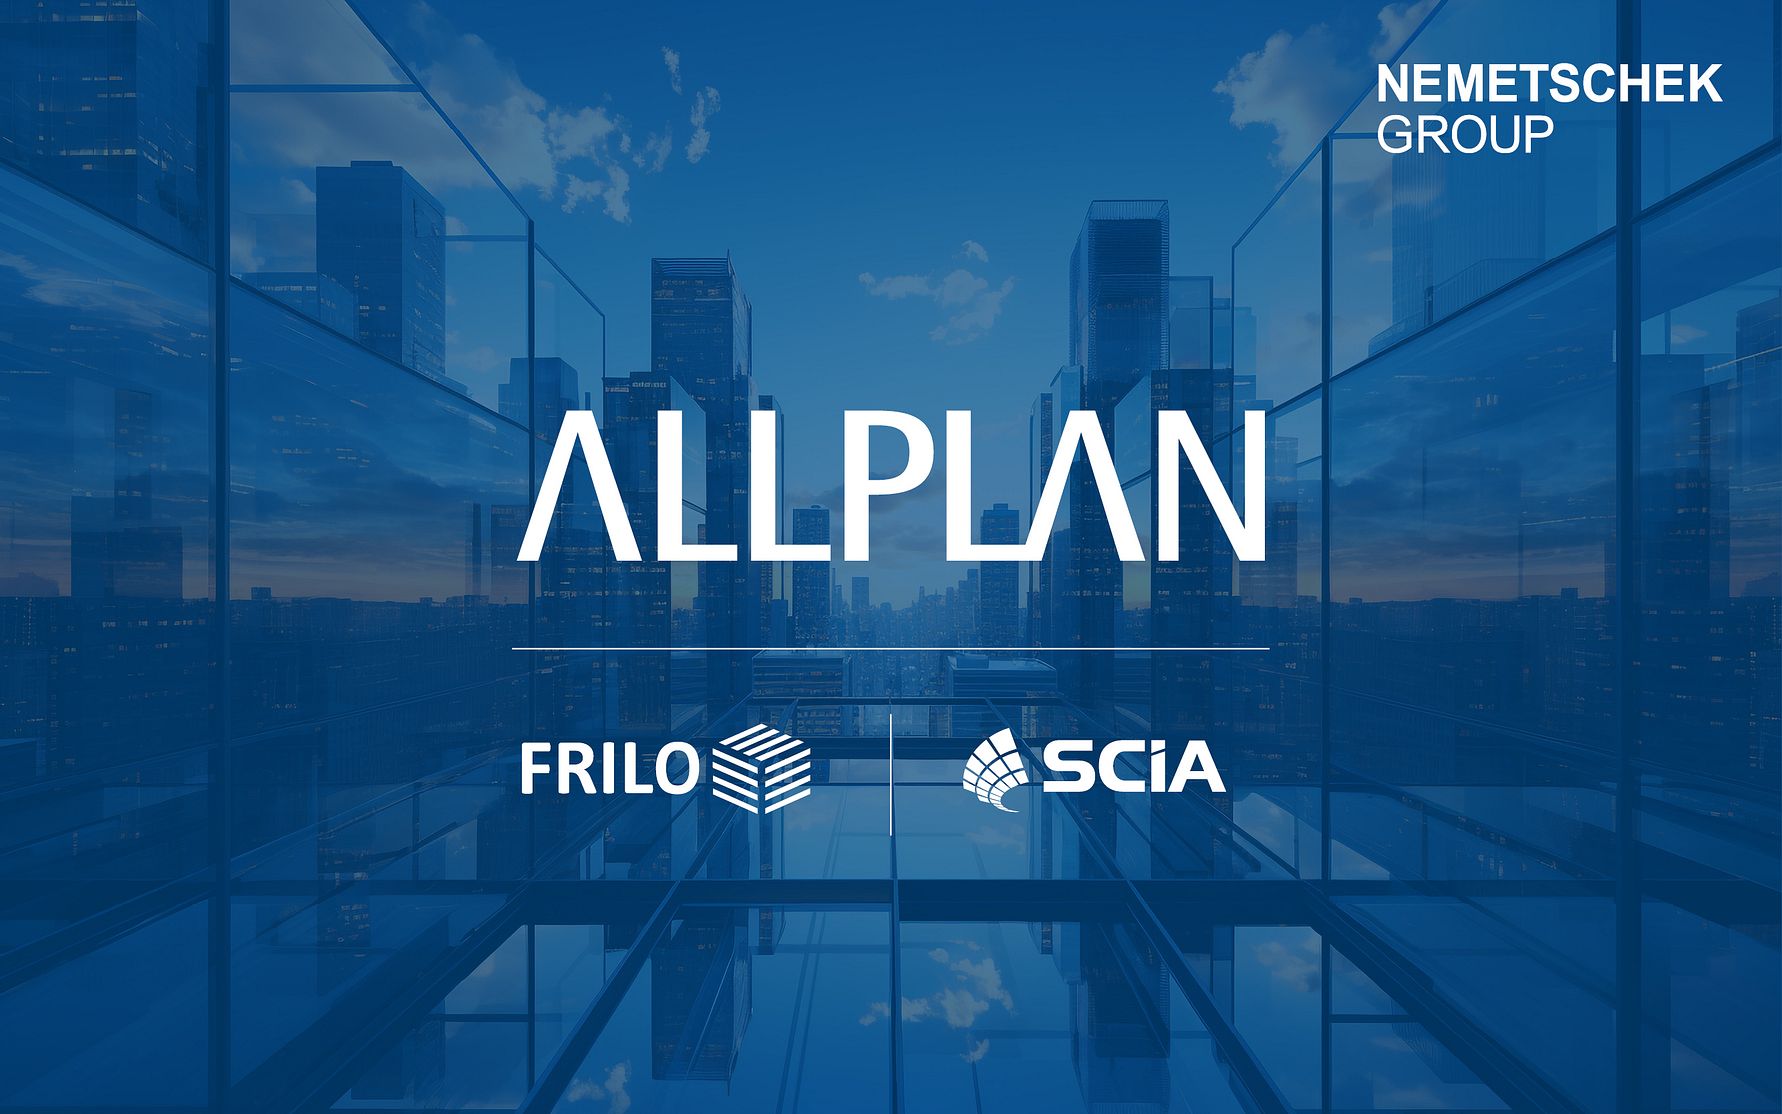 Nemetschek brands ALLPLAN, FRILO and SCIA join forces